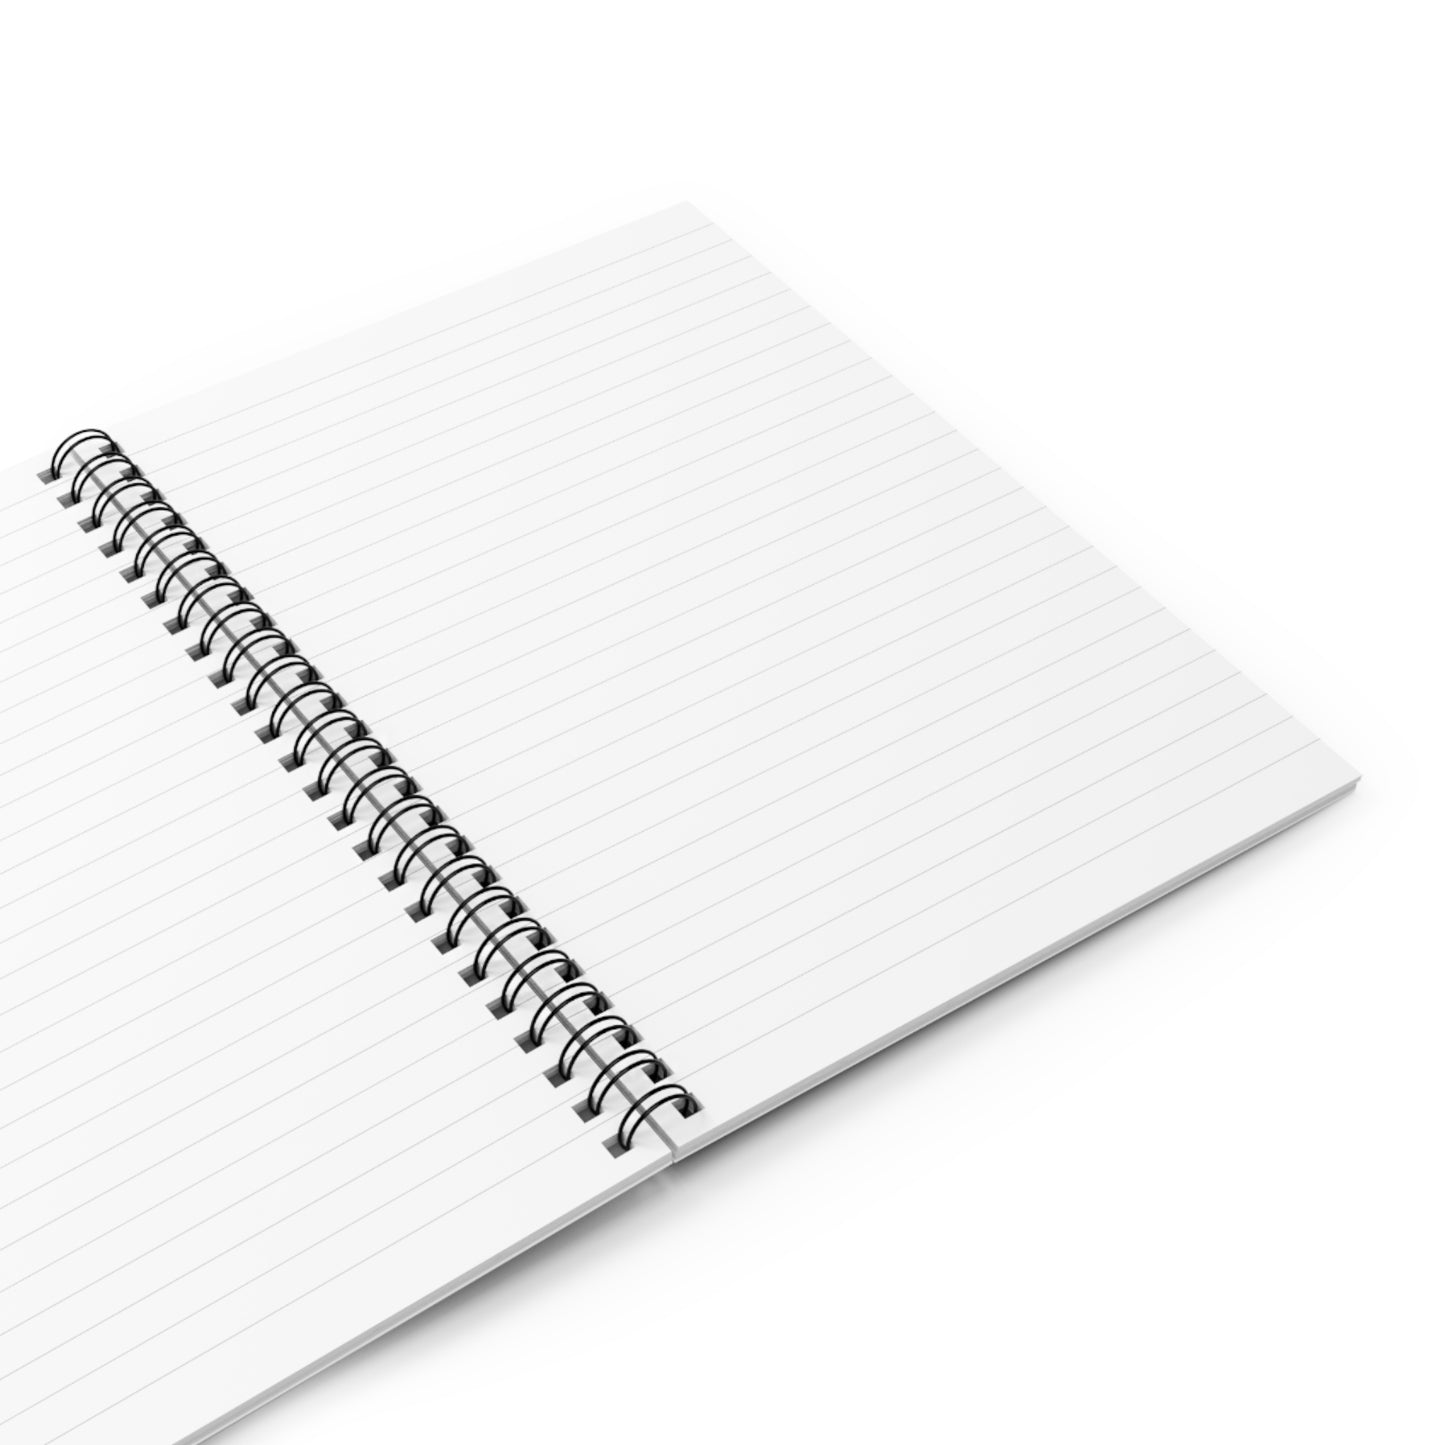 Spiral Notebook (ruled line) - Subaru of Pleasantville